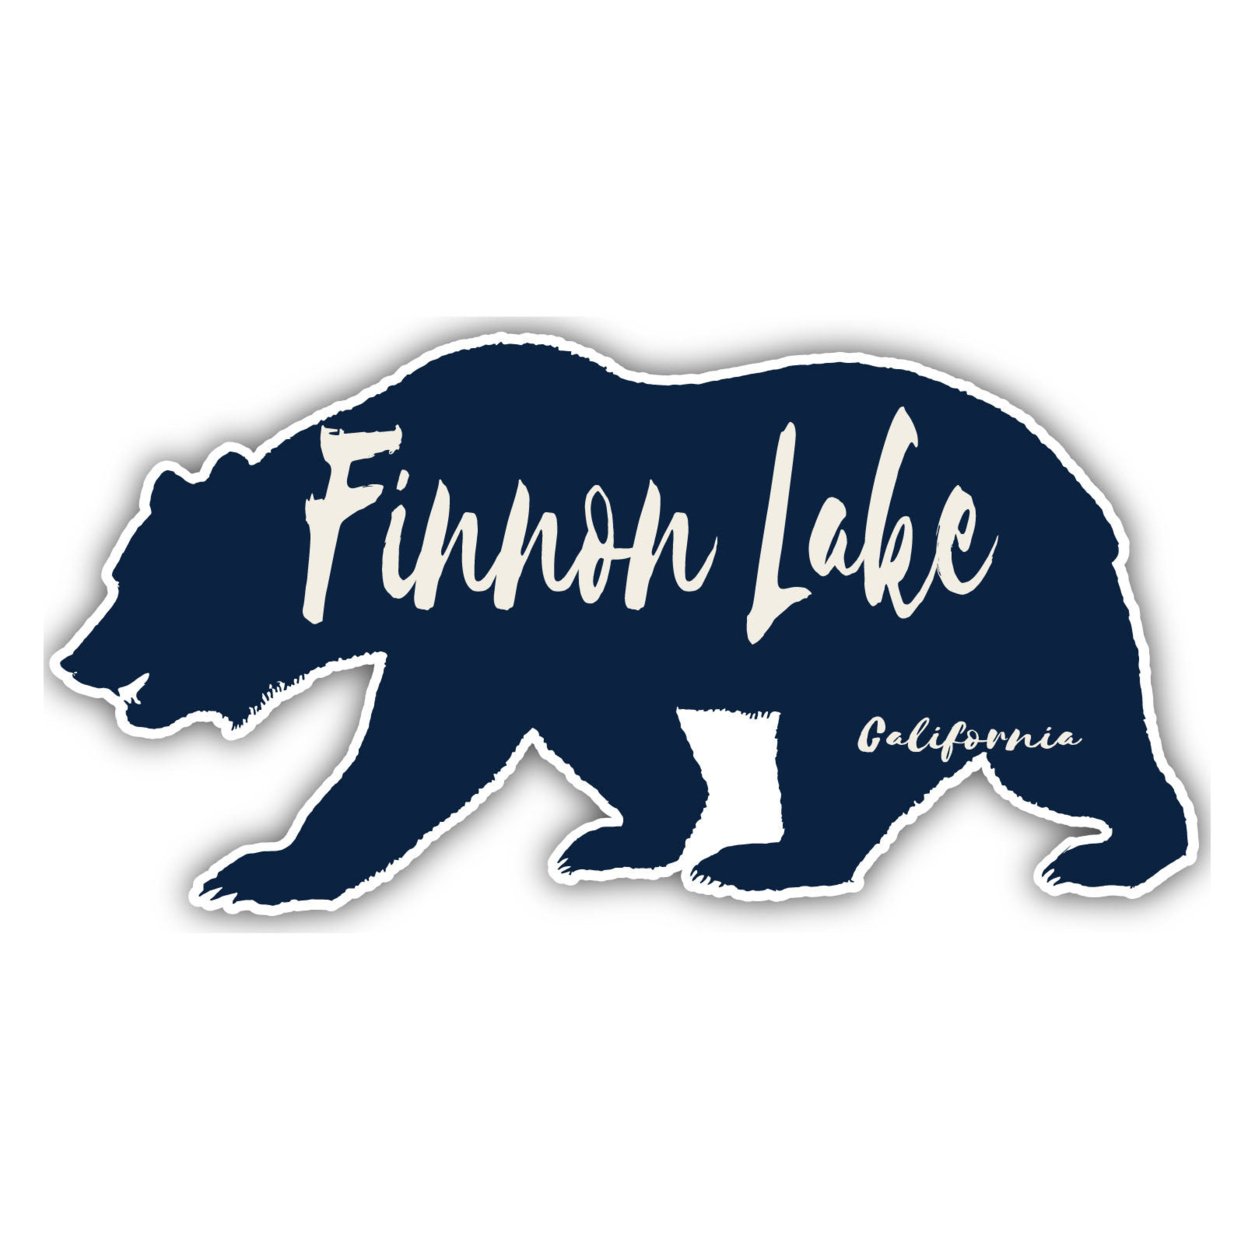 Finnon Lake California Souvenir Decorative Stickers (Choose Theme And Size) - 4-Pack, 8-Inch, Bear